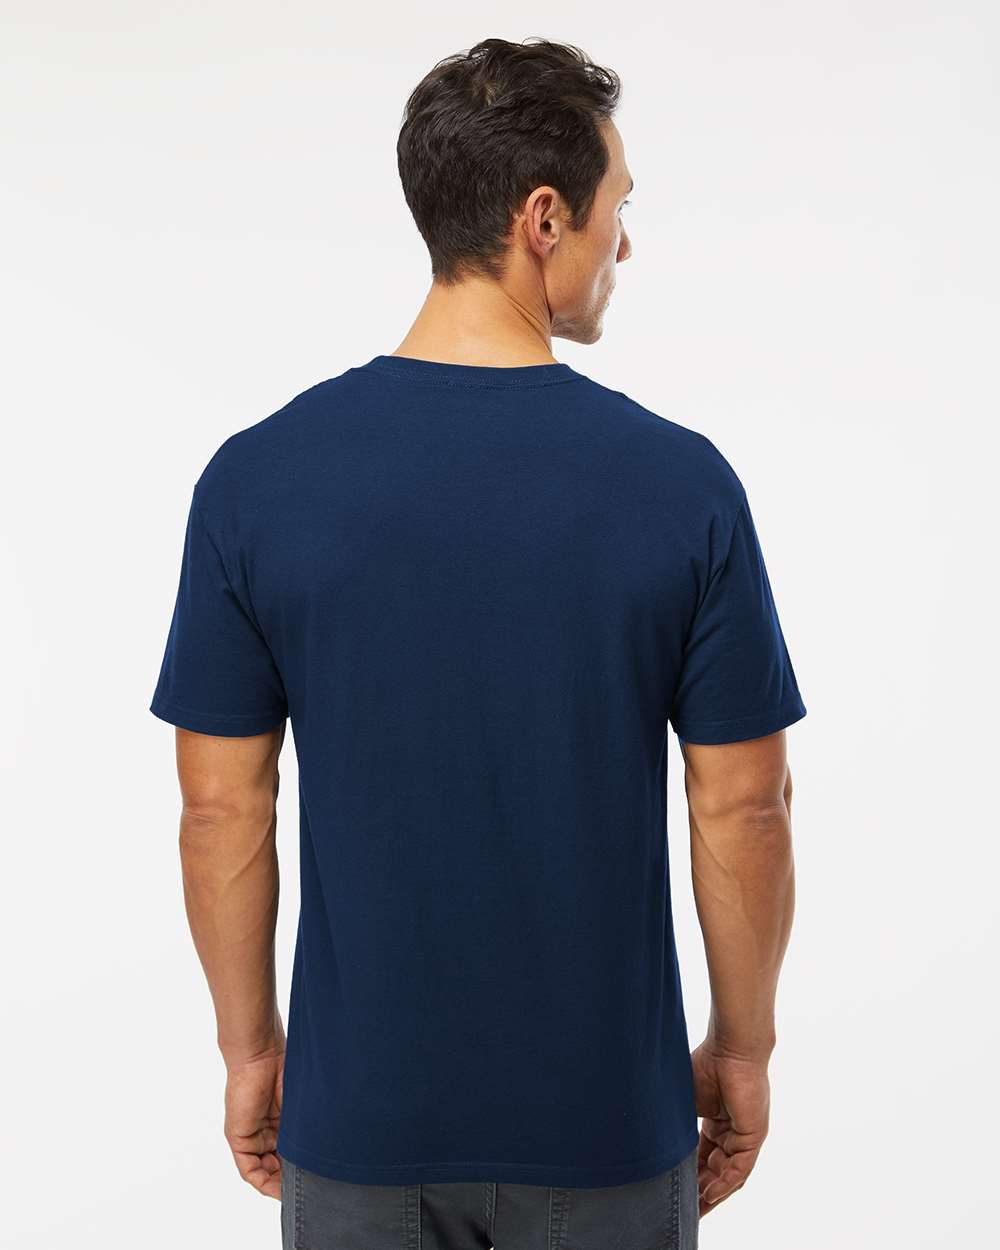 M&O Ring-Spun T-Shirt 5500 #colormdl_Deep Navy